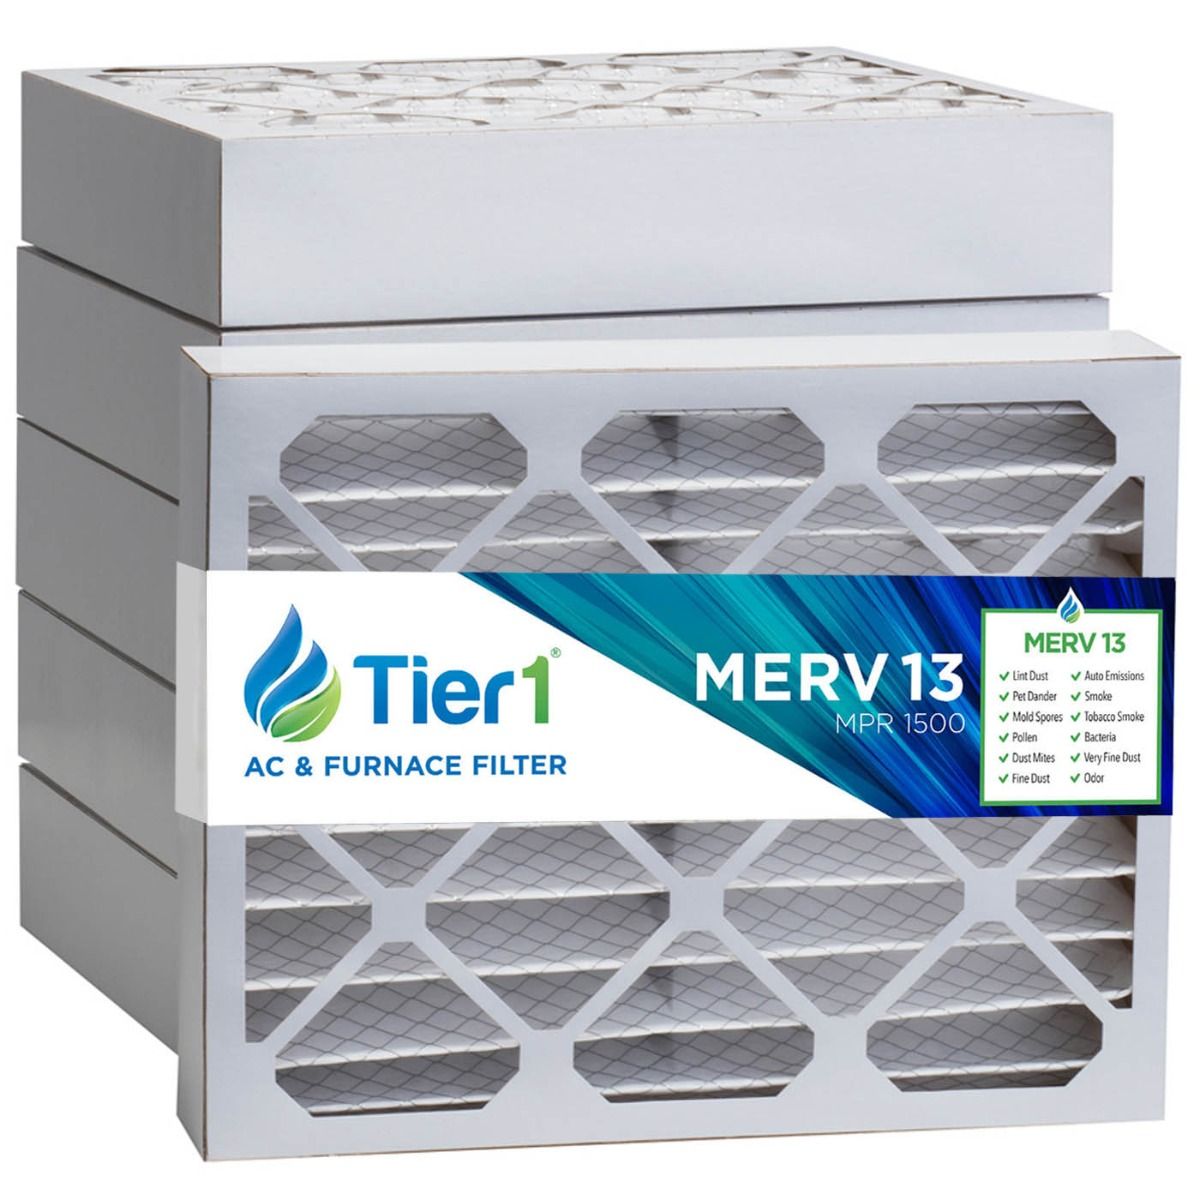 20x25x4 Merv 13 Universal Air Filter By Tier1